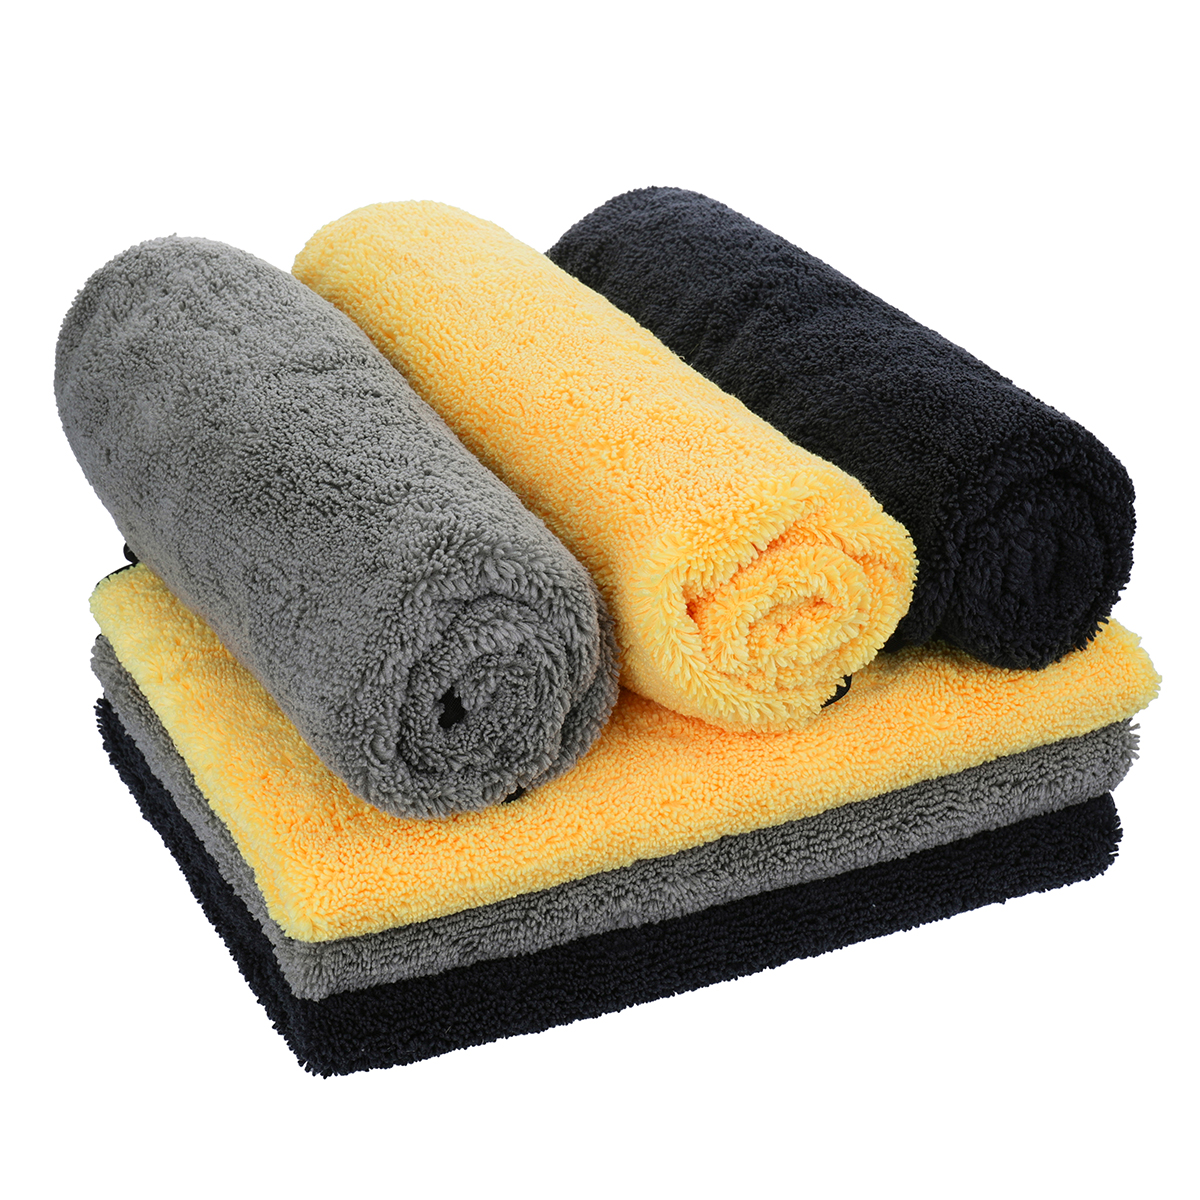 MATCC 6PCS Super Thick Soft Convenient Plush Microfiber Car Cleaning Towel 16X32Inch